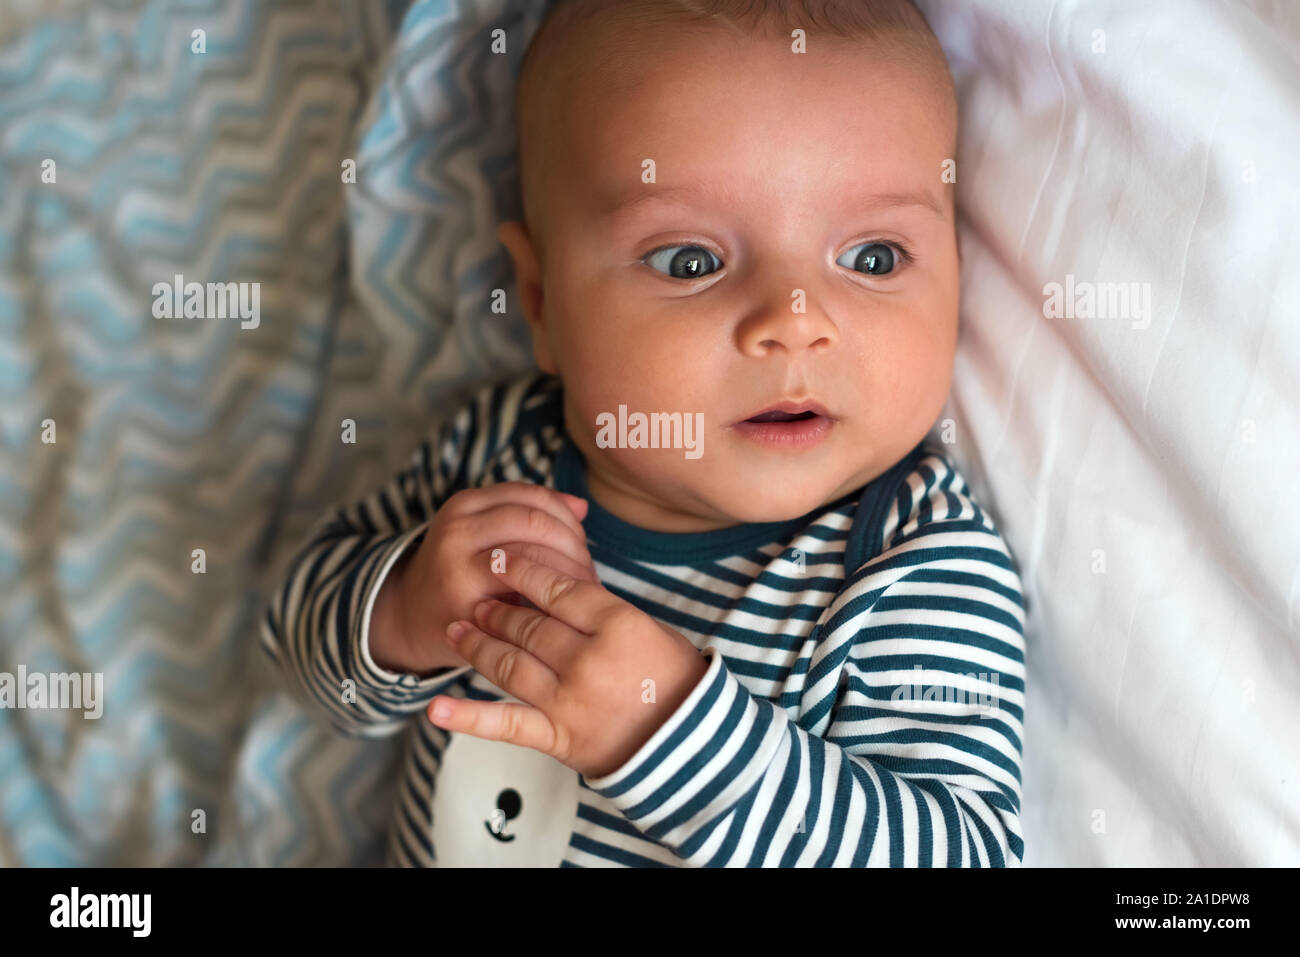 8 ideas de Manta de meses bebe  bebe, fotos bebes, mes a mes bebe